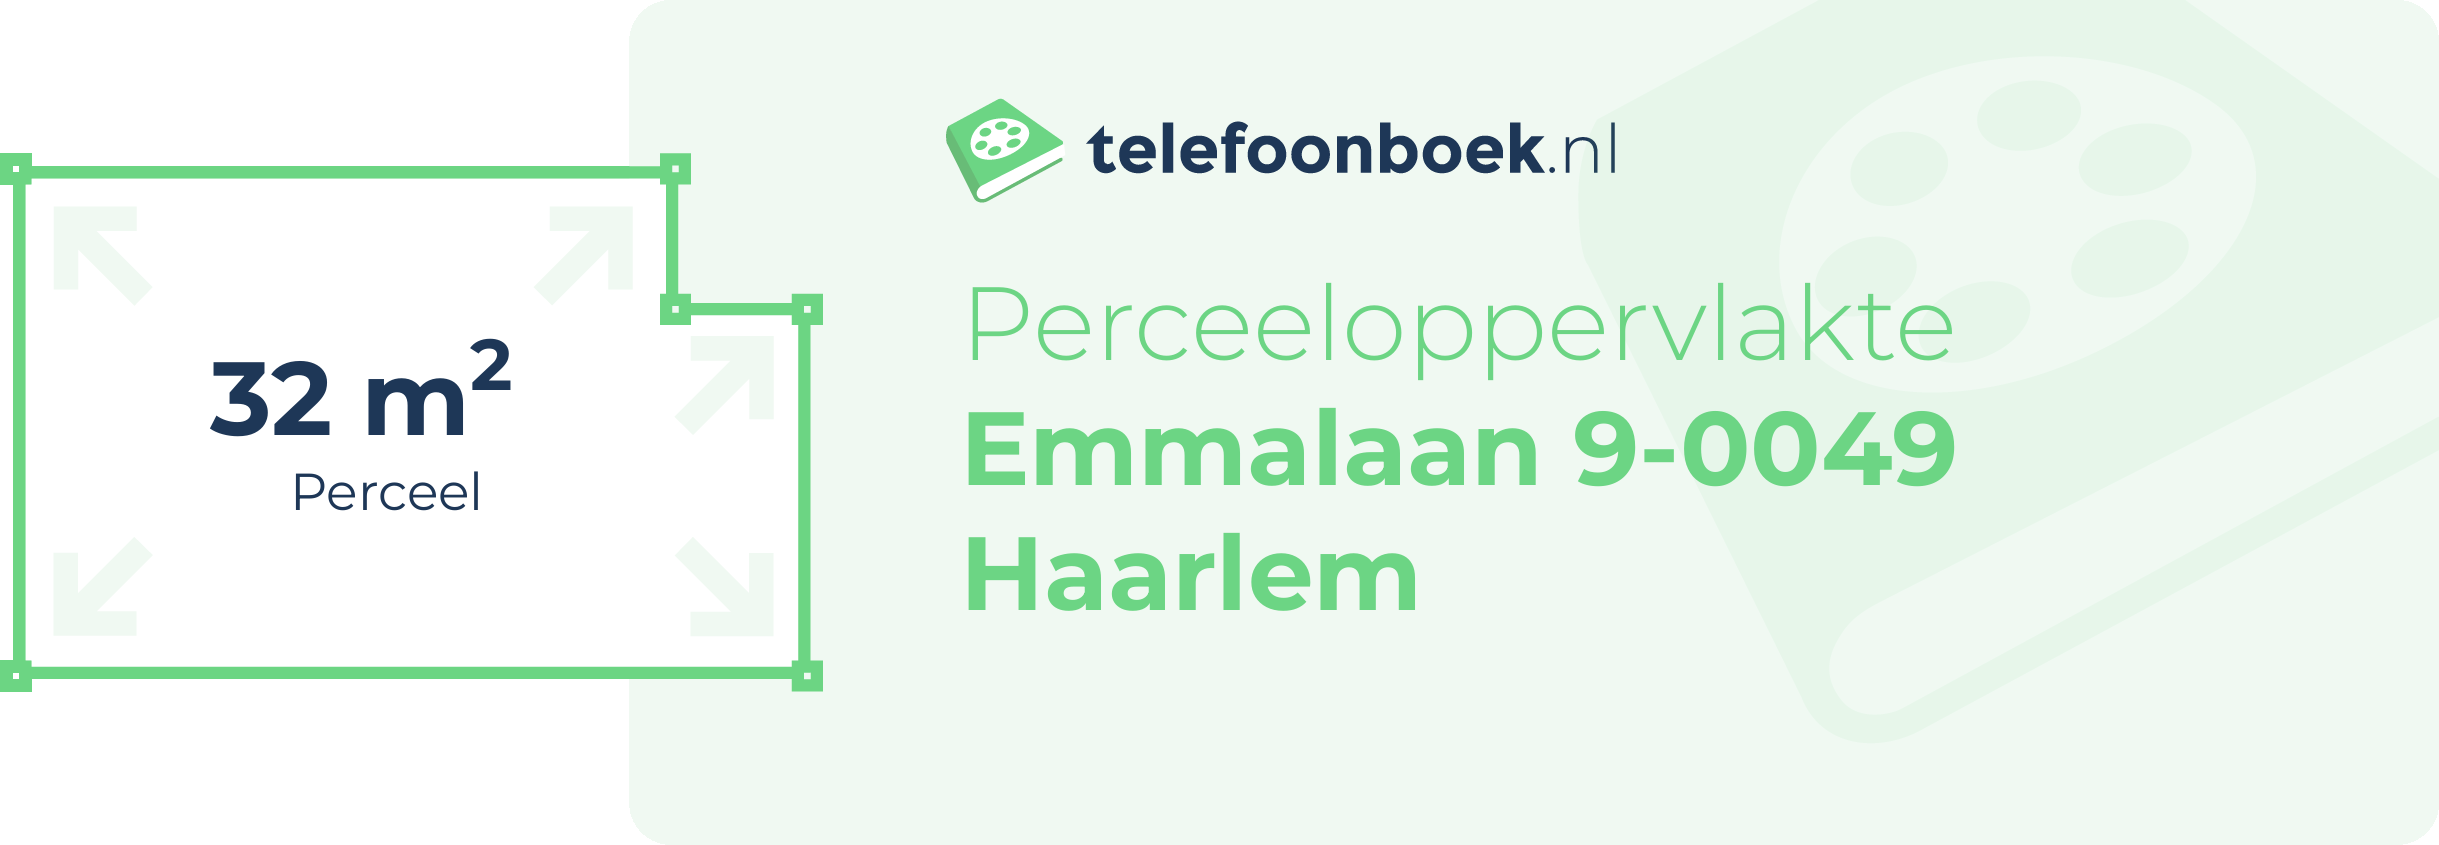 Perceeloppervlakte Emmalaan 9-0049 Haarlem